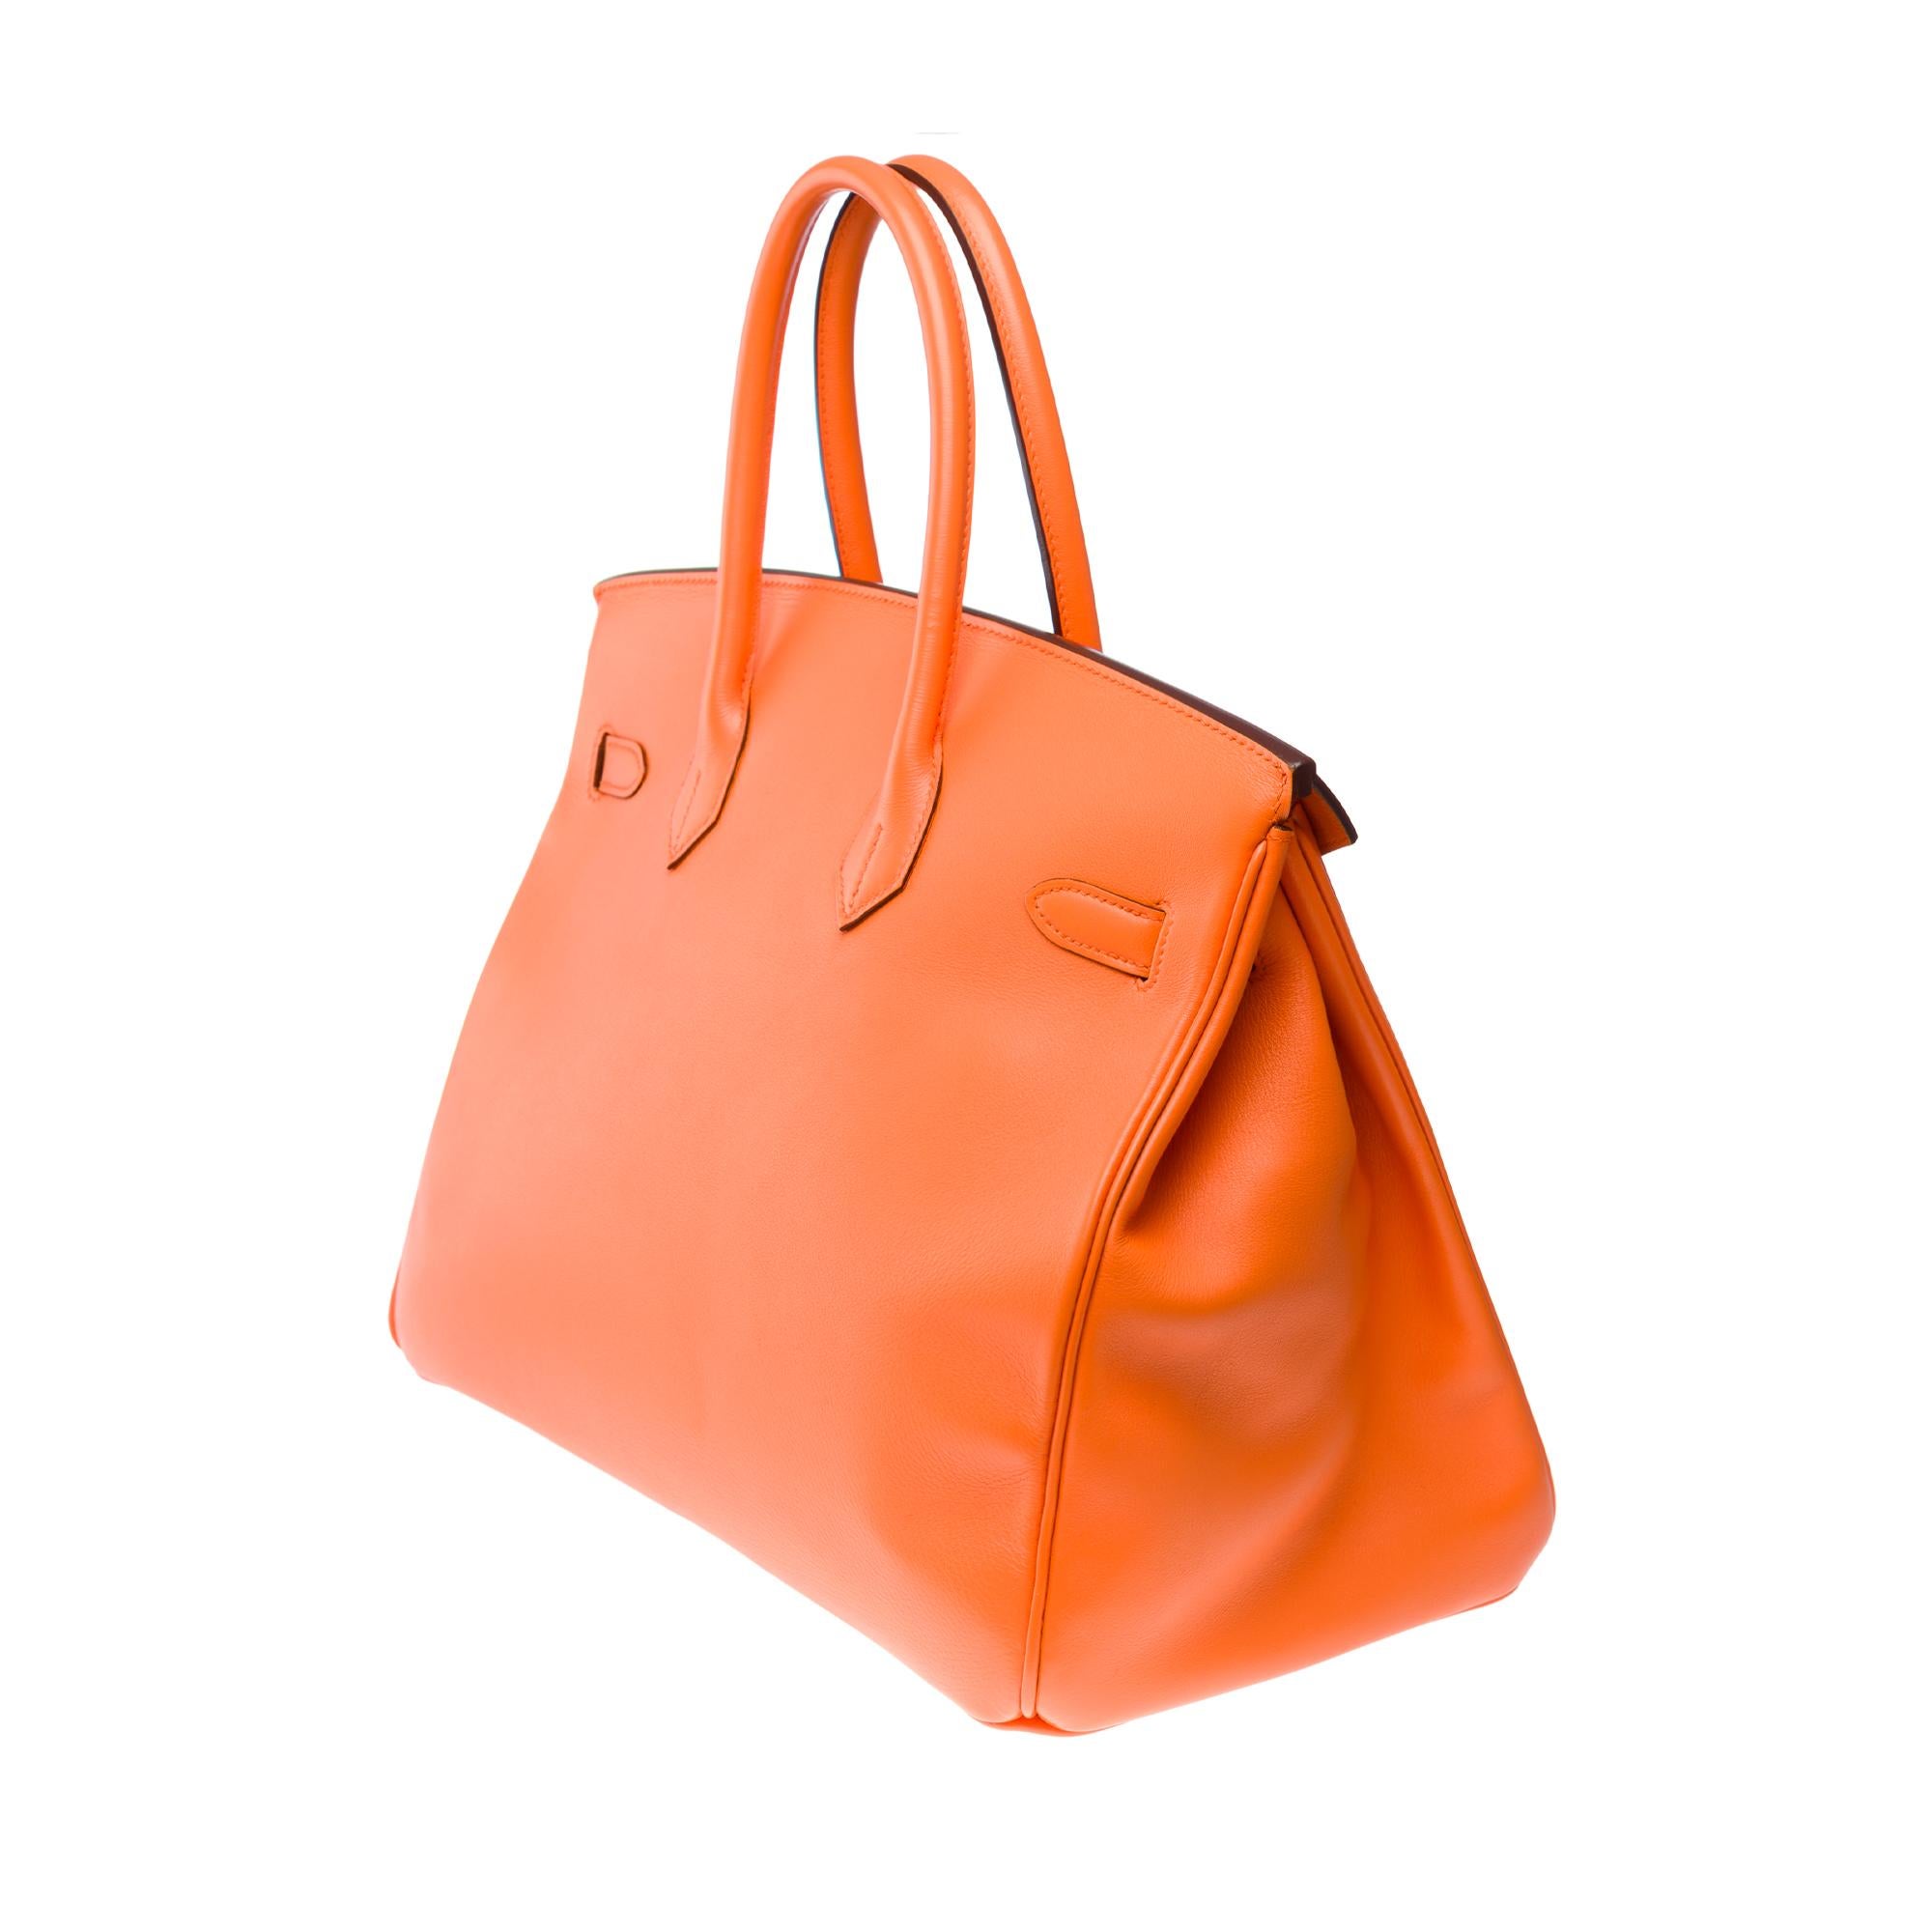 Amazing Hermès Birkin 35 handbag in Orange Swift Calf leather, GHW 2